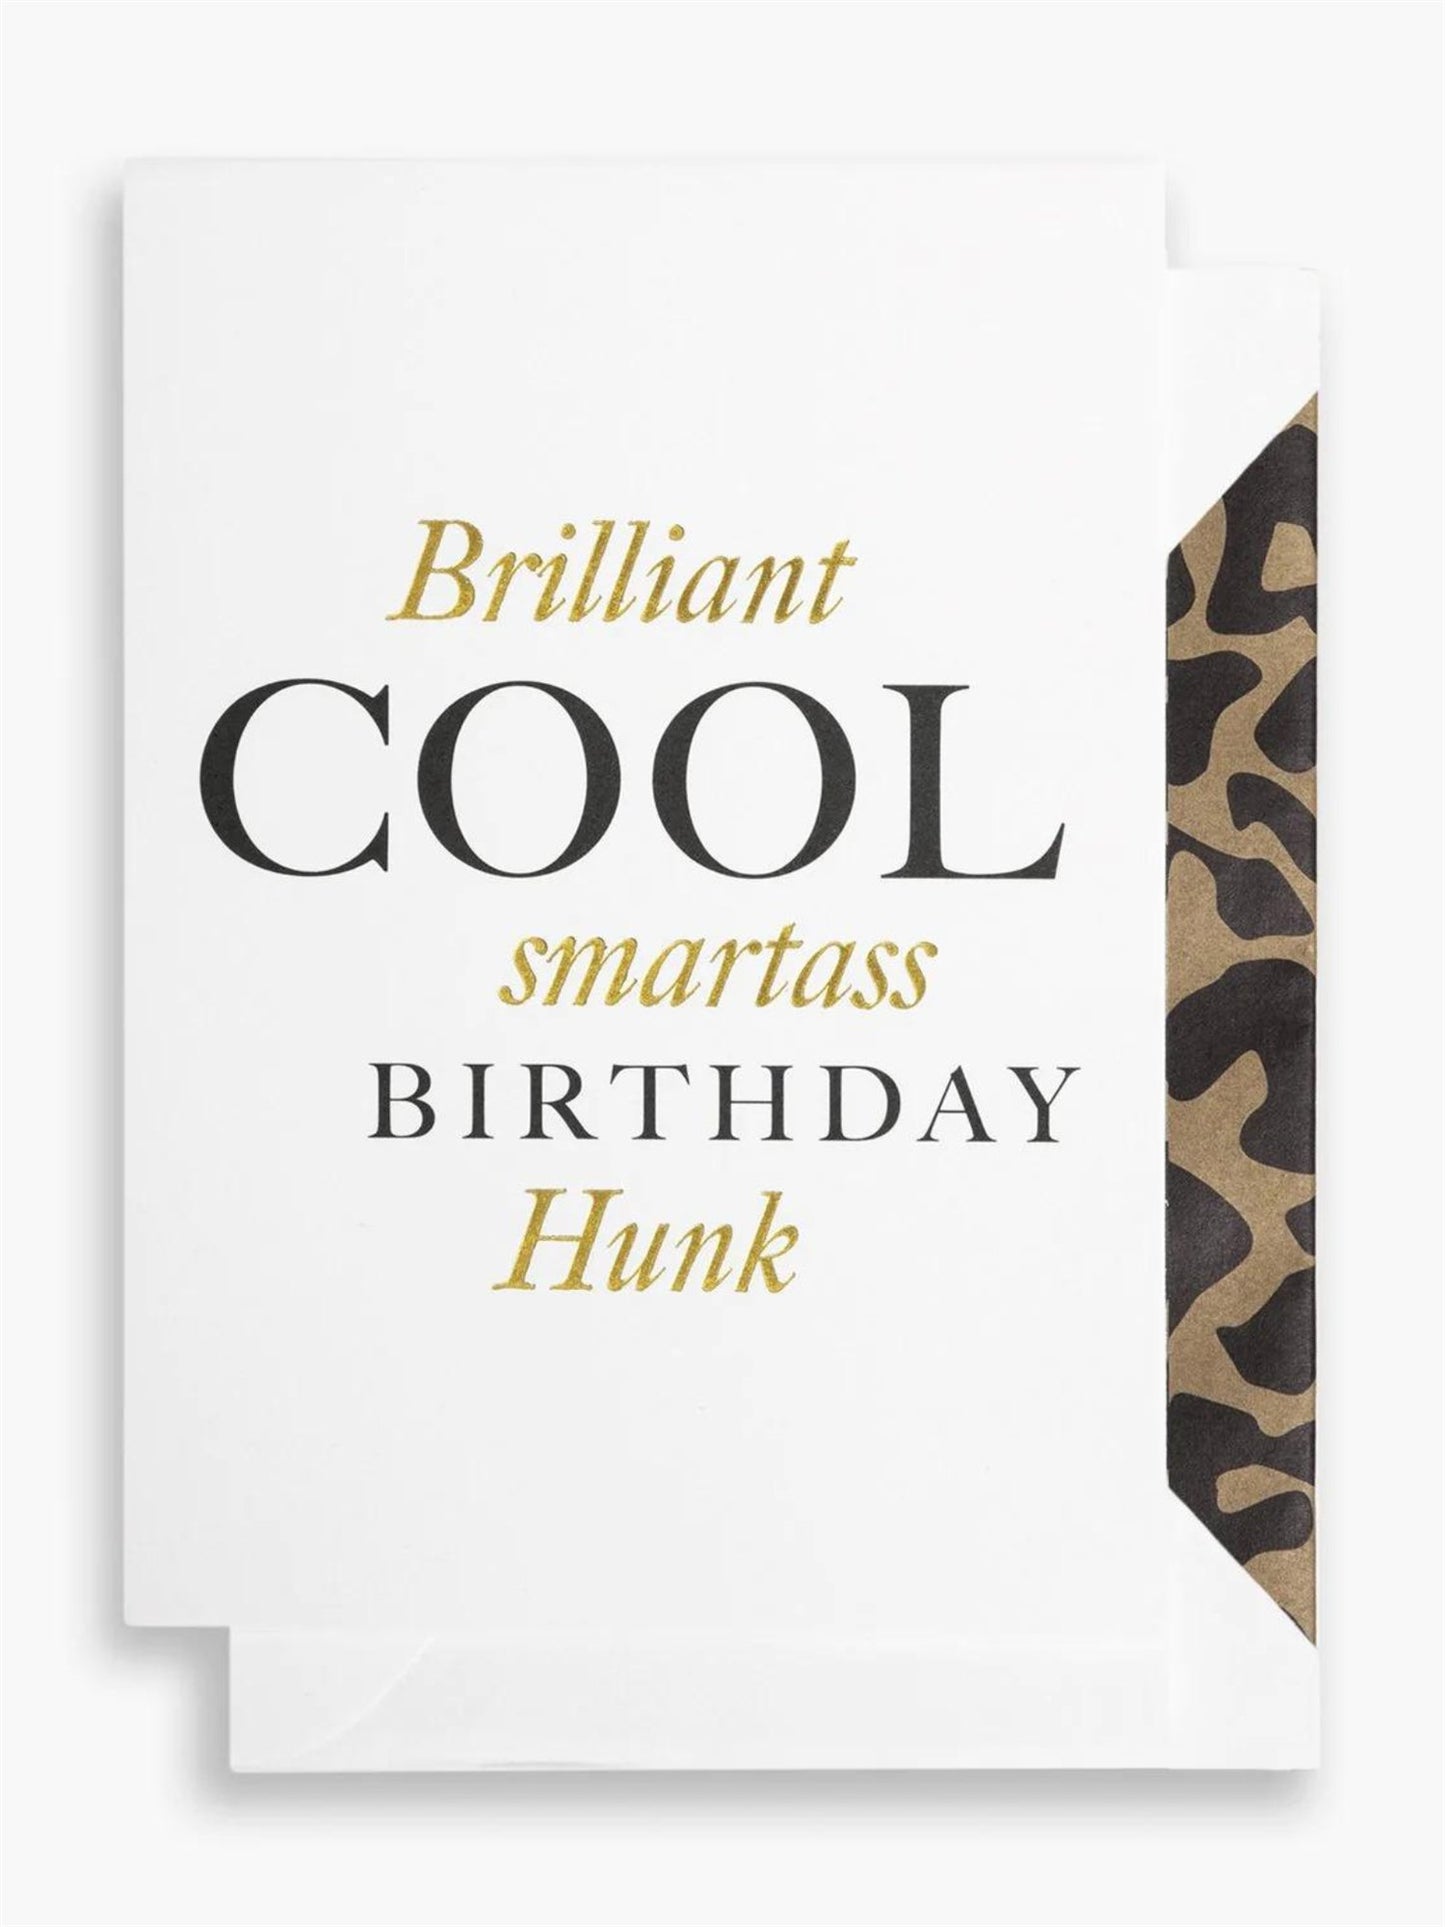 A6 Kort - "Brilliant Cool Smartass Birthday Hunk" - at home